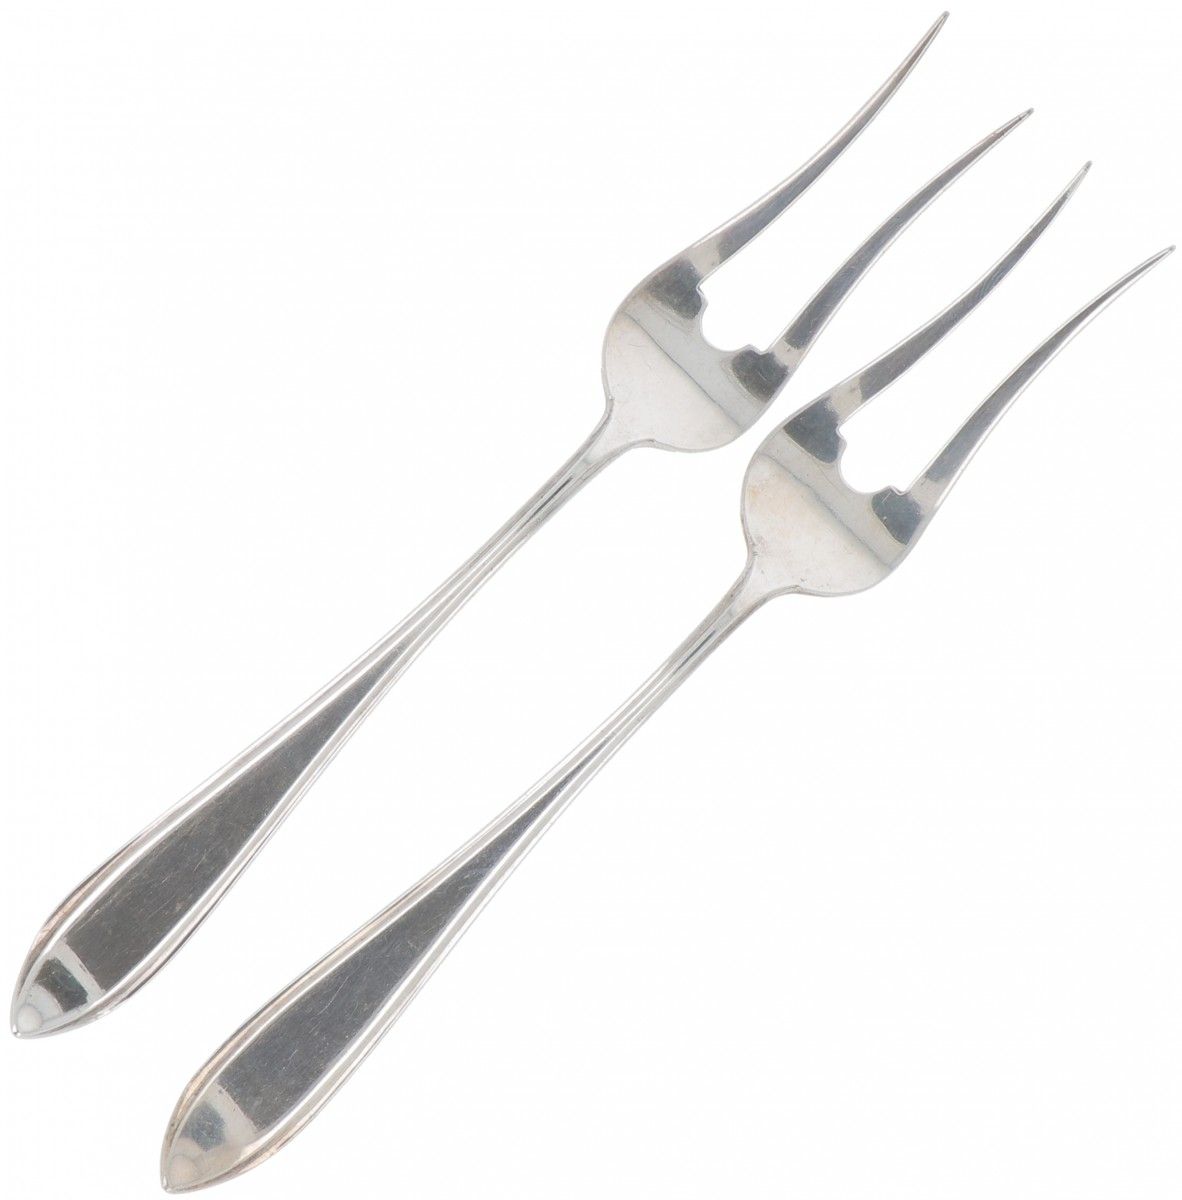 (2) piece set of cold meat forks "Dutch point fillet" silver. "Filet de pointe h&hellip;